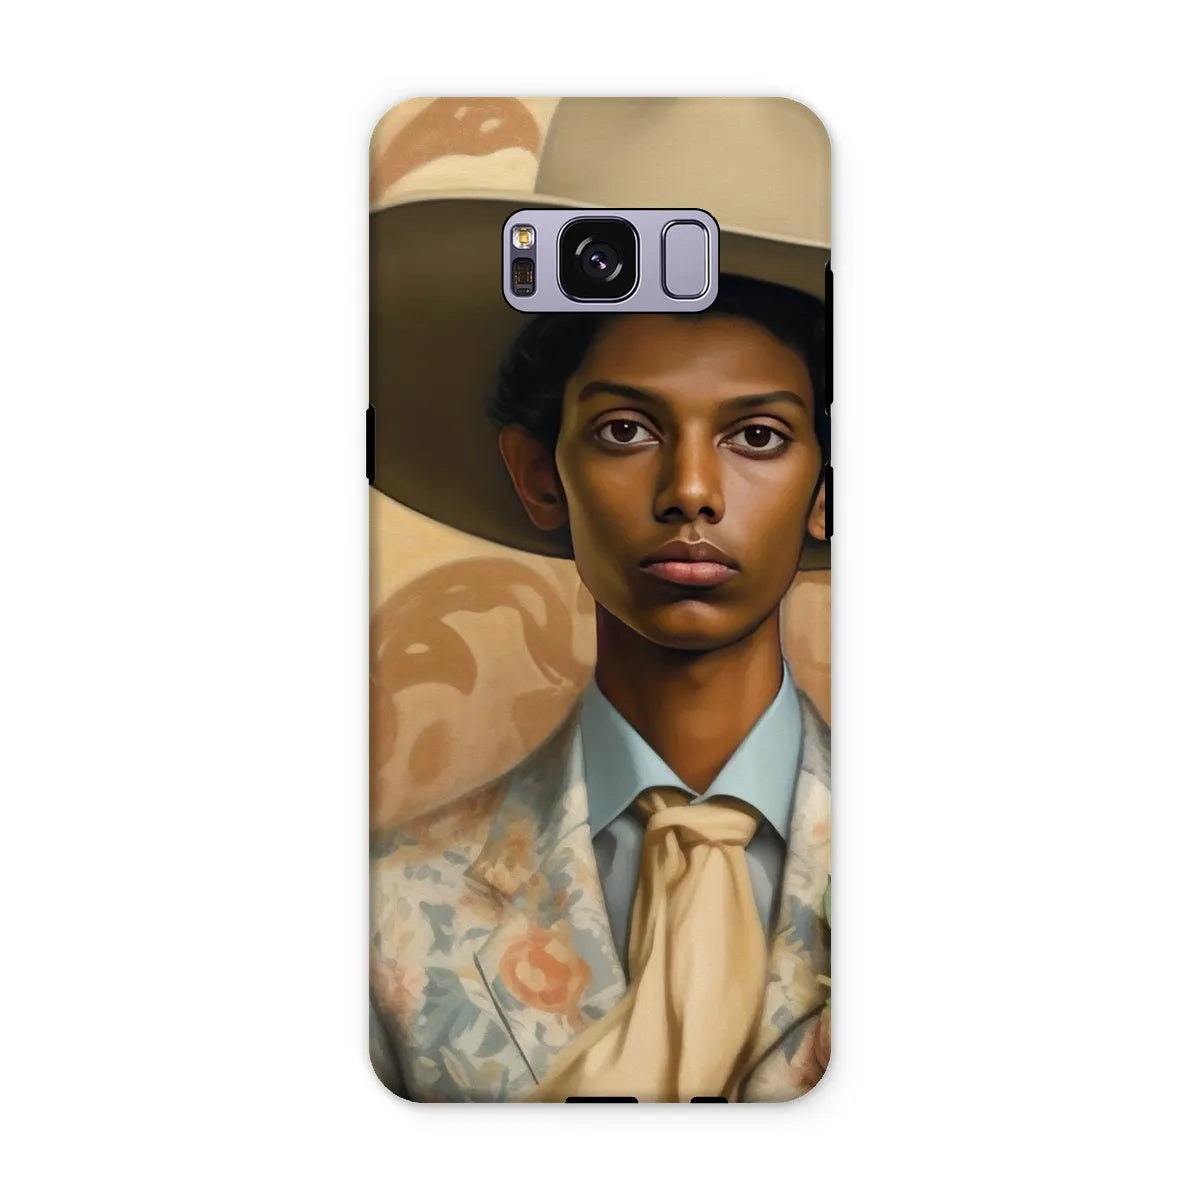 Mallaravan The Transgender Cowboy - F2m Dandy Art Phone Case - Samsung Galaxy S8 Plus / Matte - Mobile Phone Cases